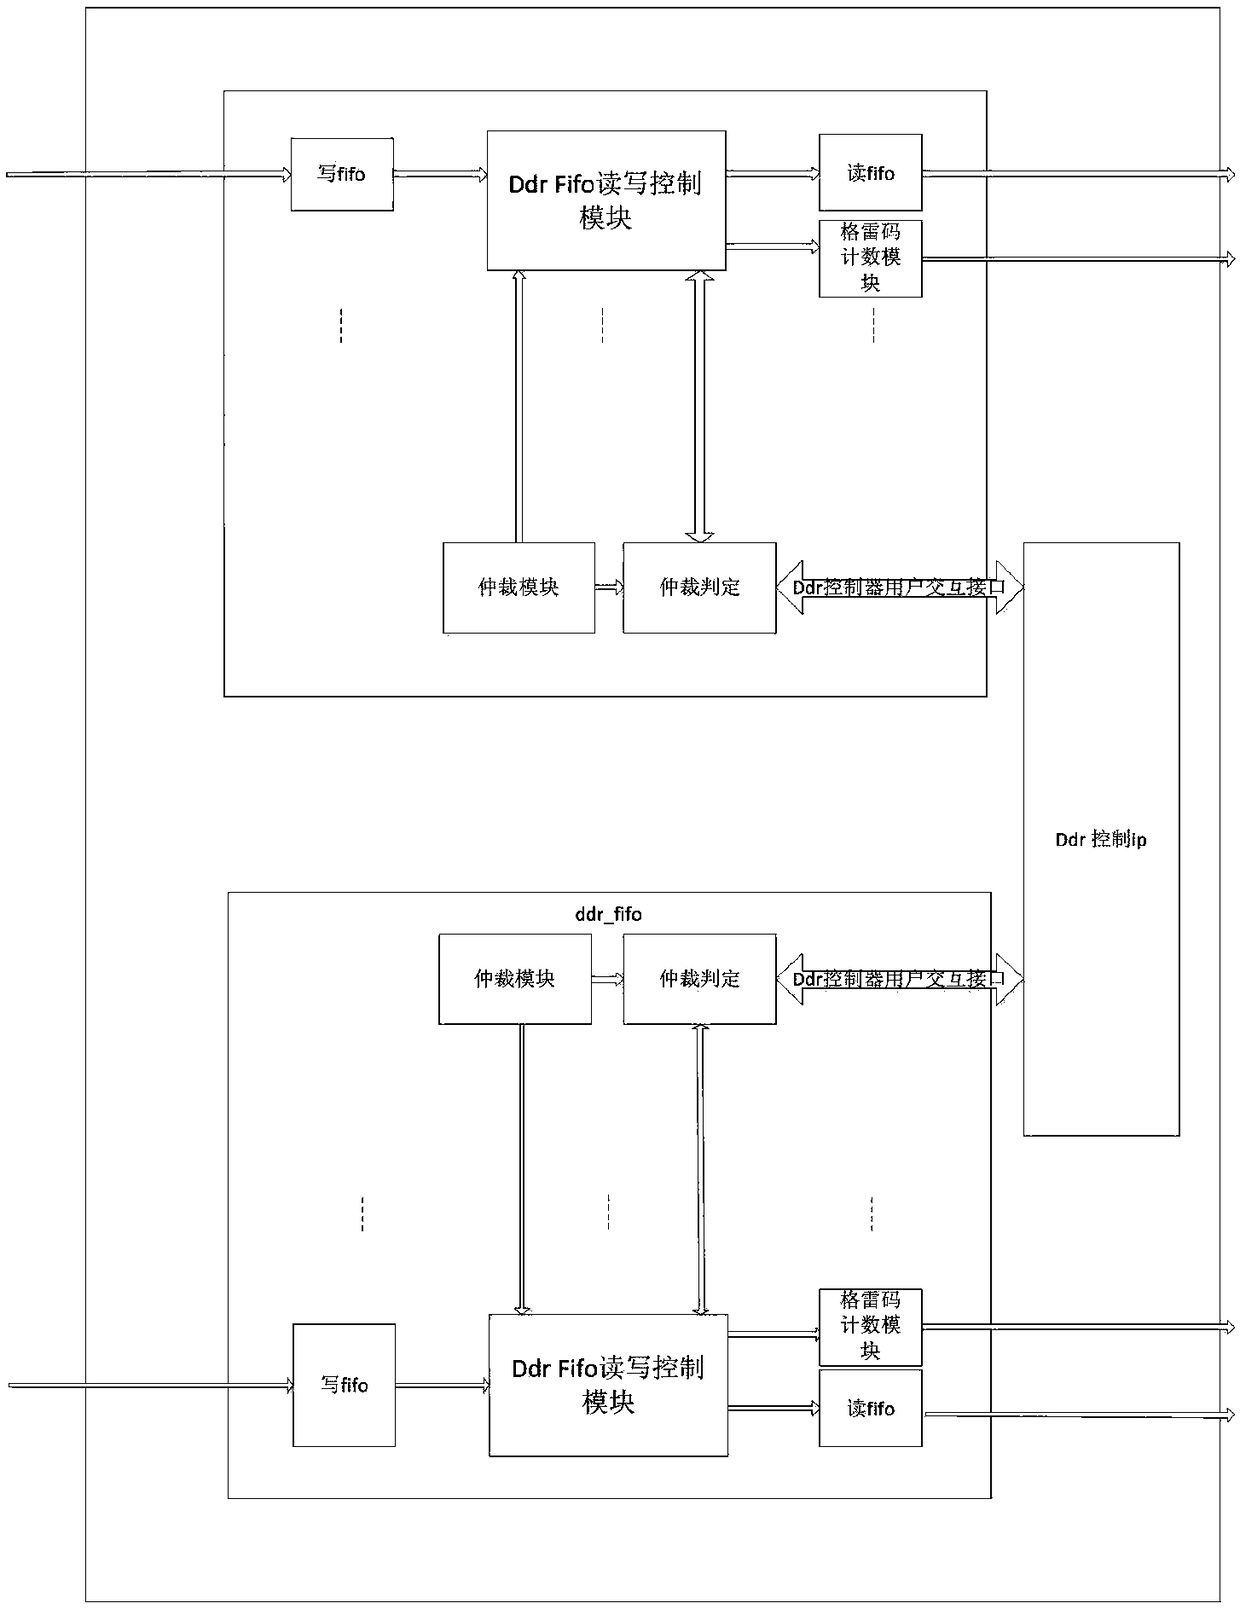 An FPGA implementation method of multi-channel data source DDR buffer